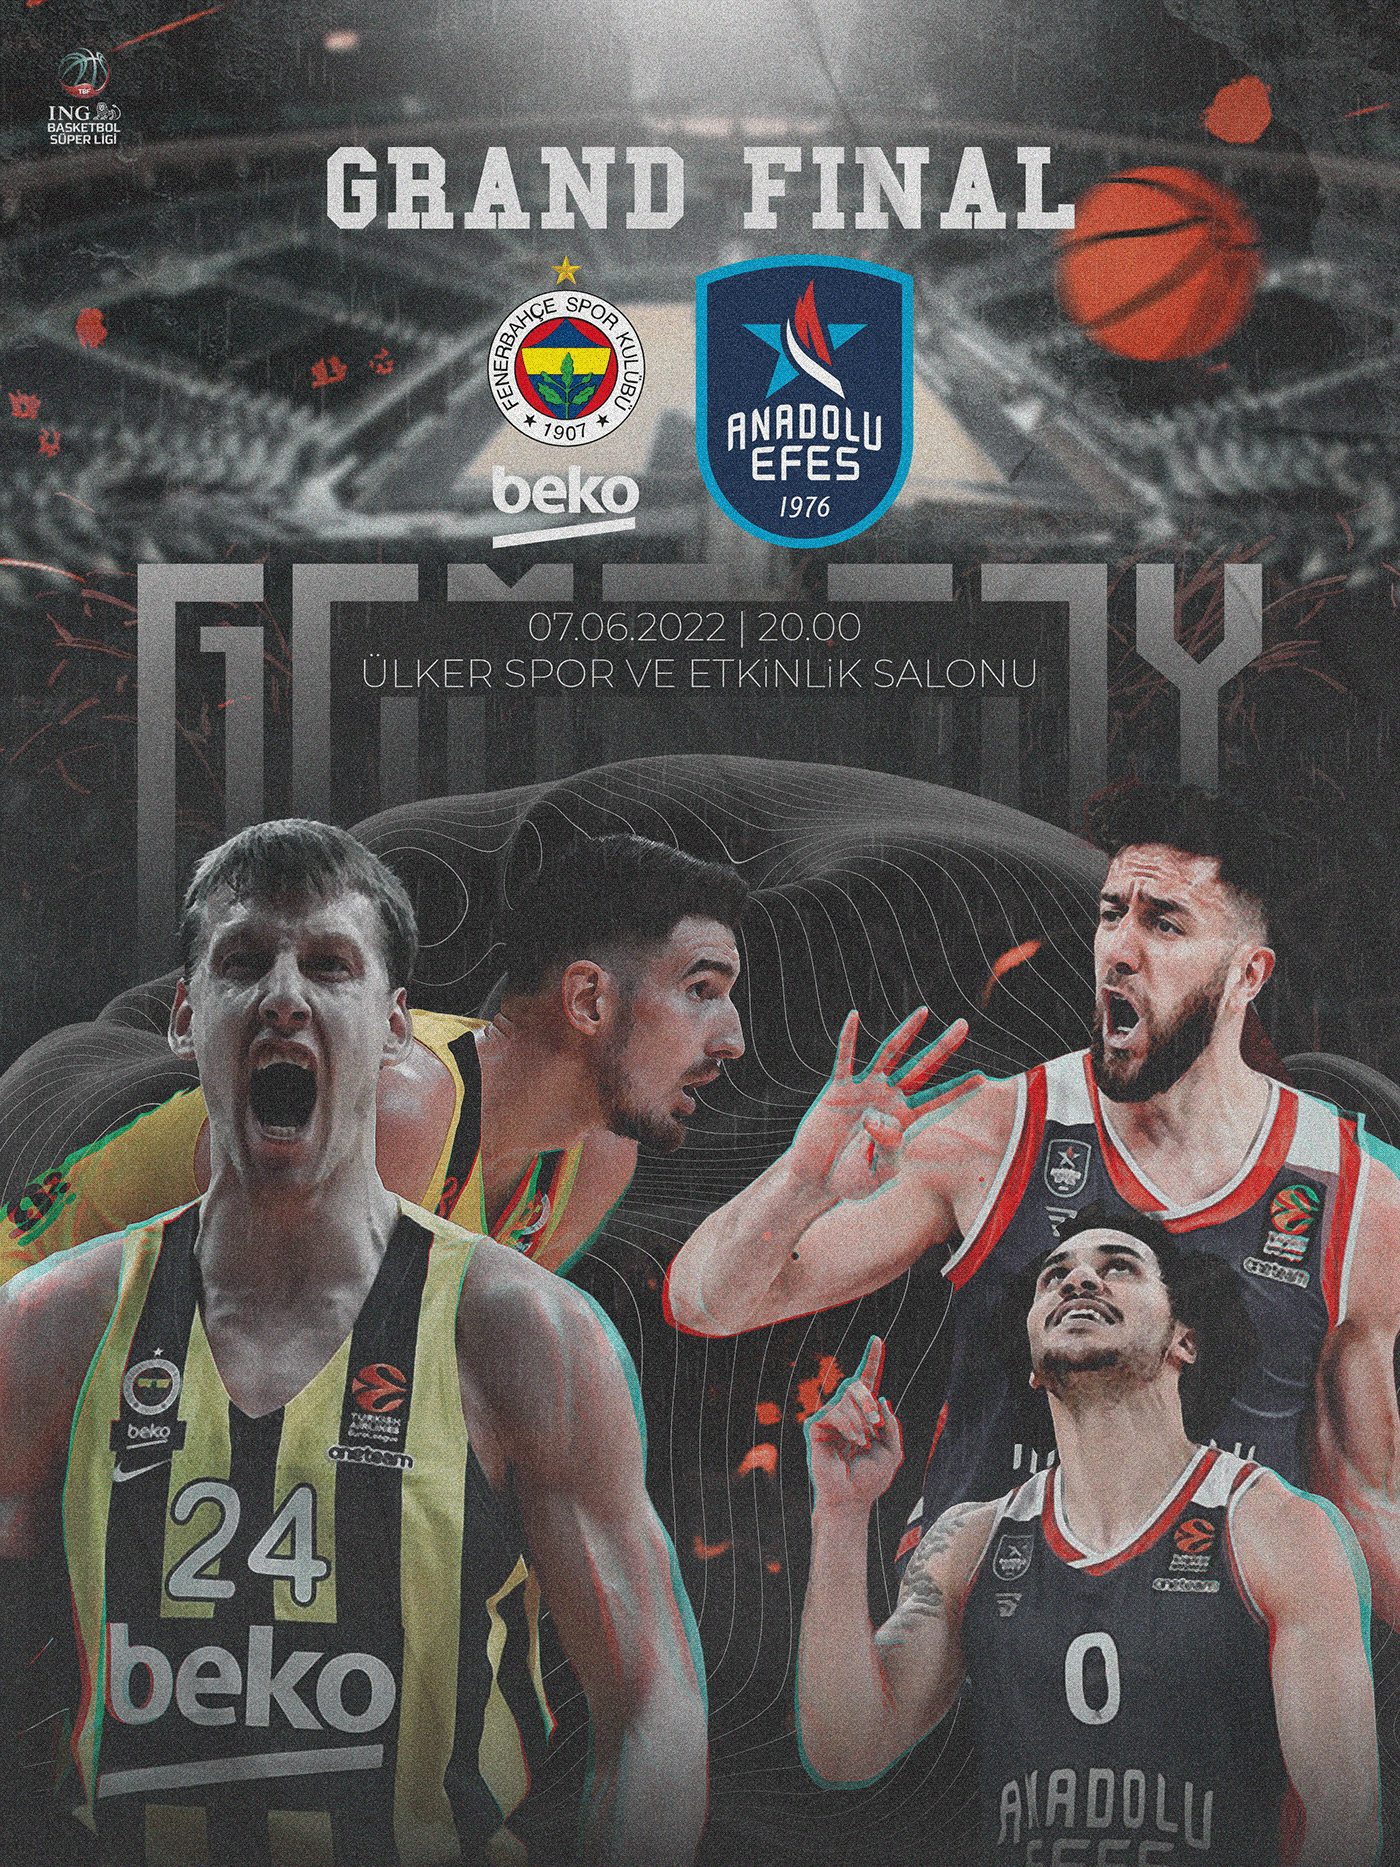 anadoluefes basketball Fenerbahçe fenerbahçevsanadoluefes grand final match day Match Day Poster poster sport poster Sports Design